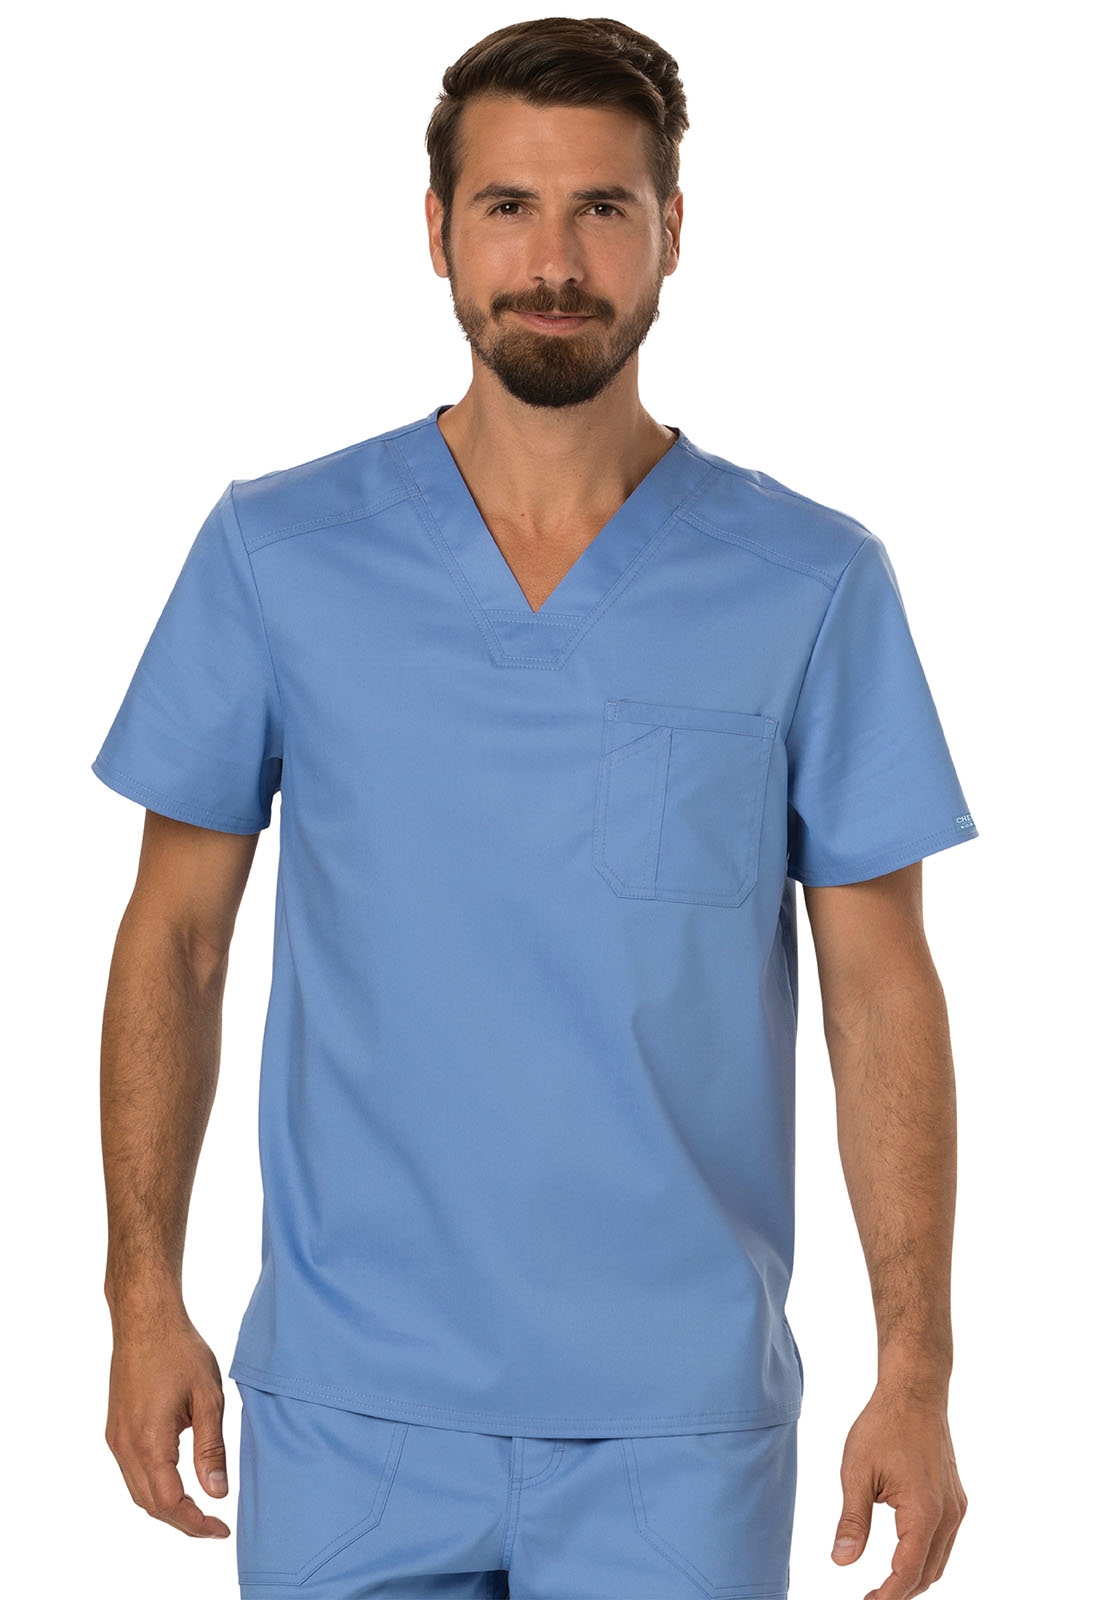 Size Medium NEW Mens Surgical Scrubs Top Operating Shirt V Neck 